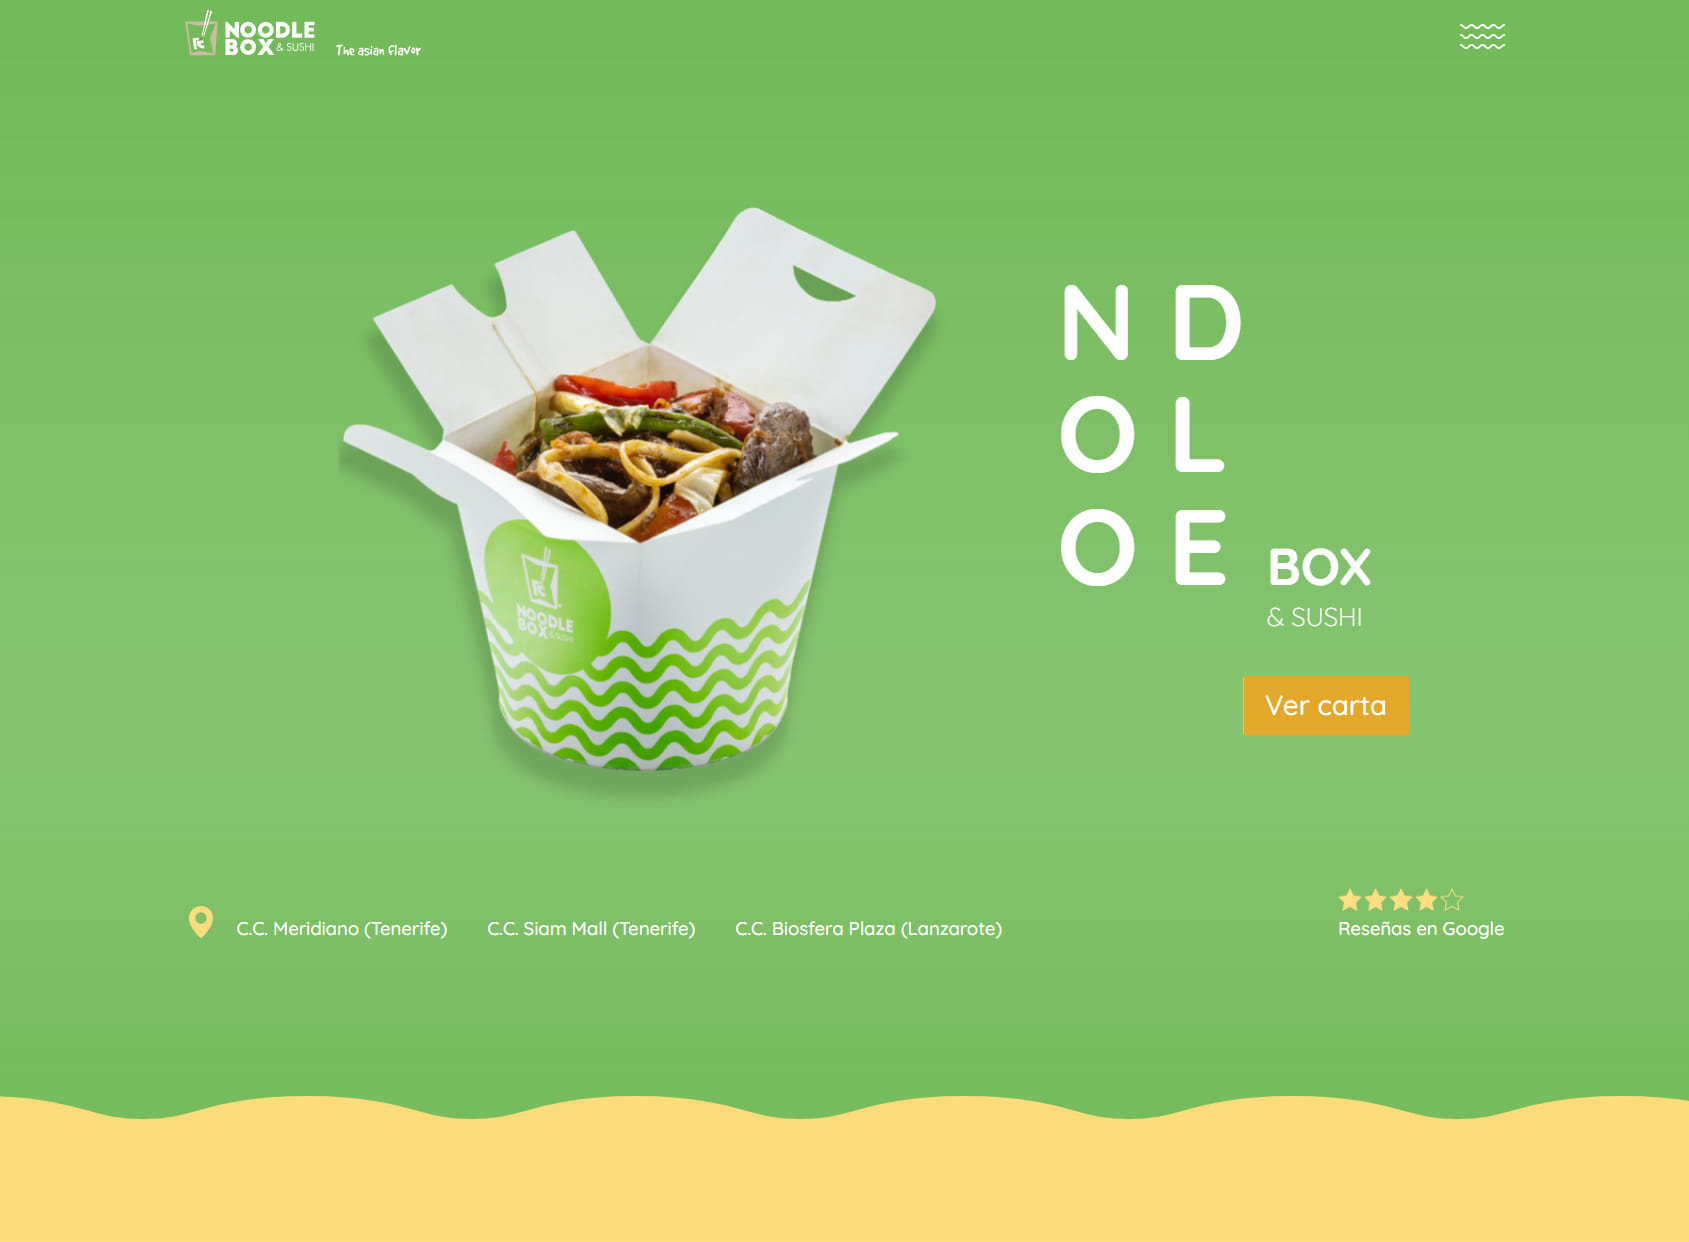 Noodle Box & Sushi - CC Meridiano